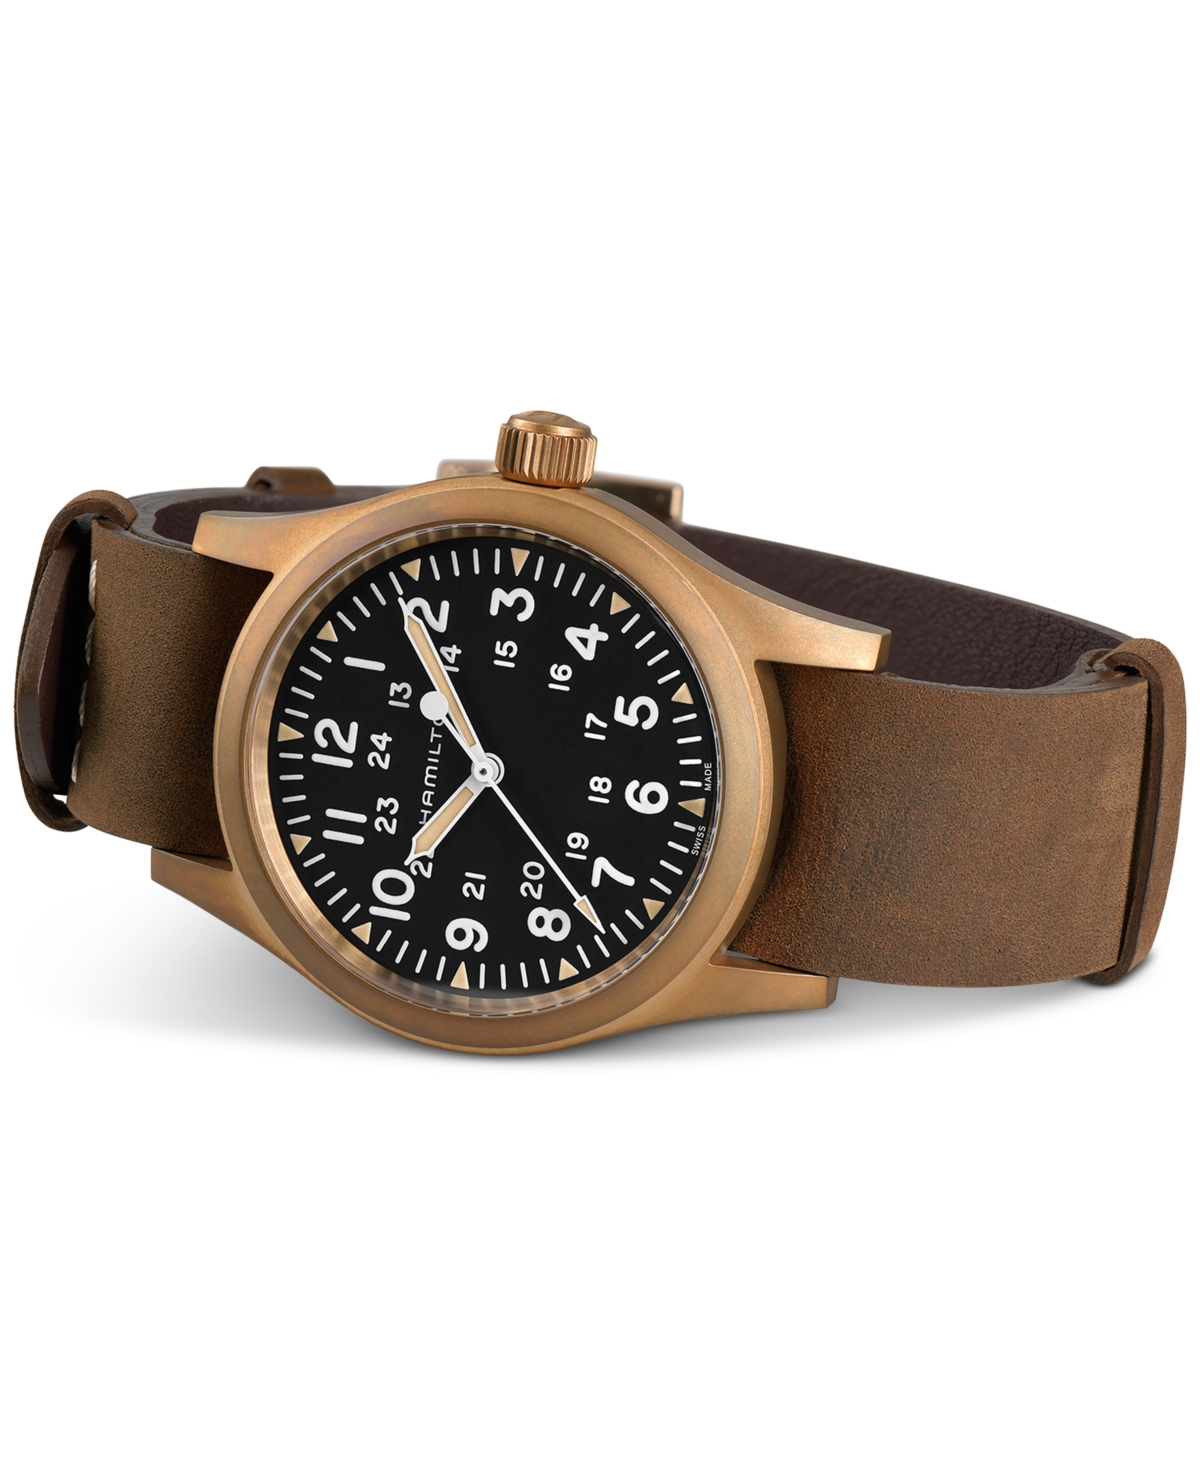 Shop Hamilton Men's Swiss Mechanical Khaki Field Brown Leather Strap Watch 38mm